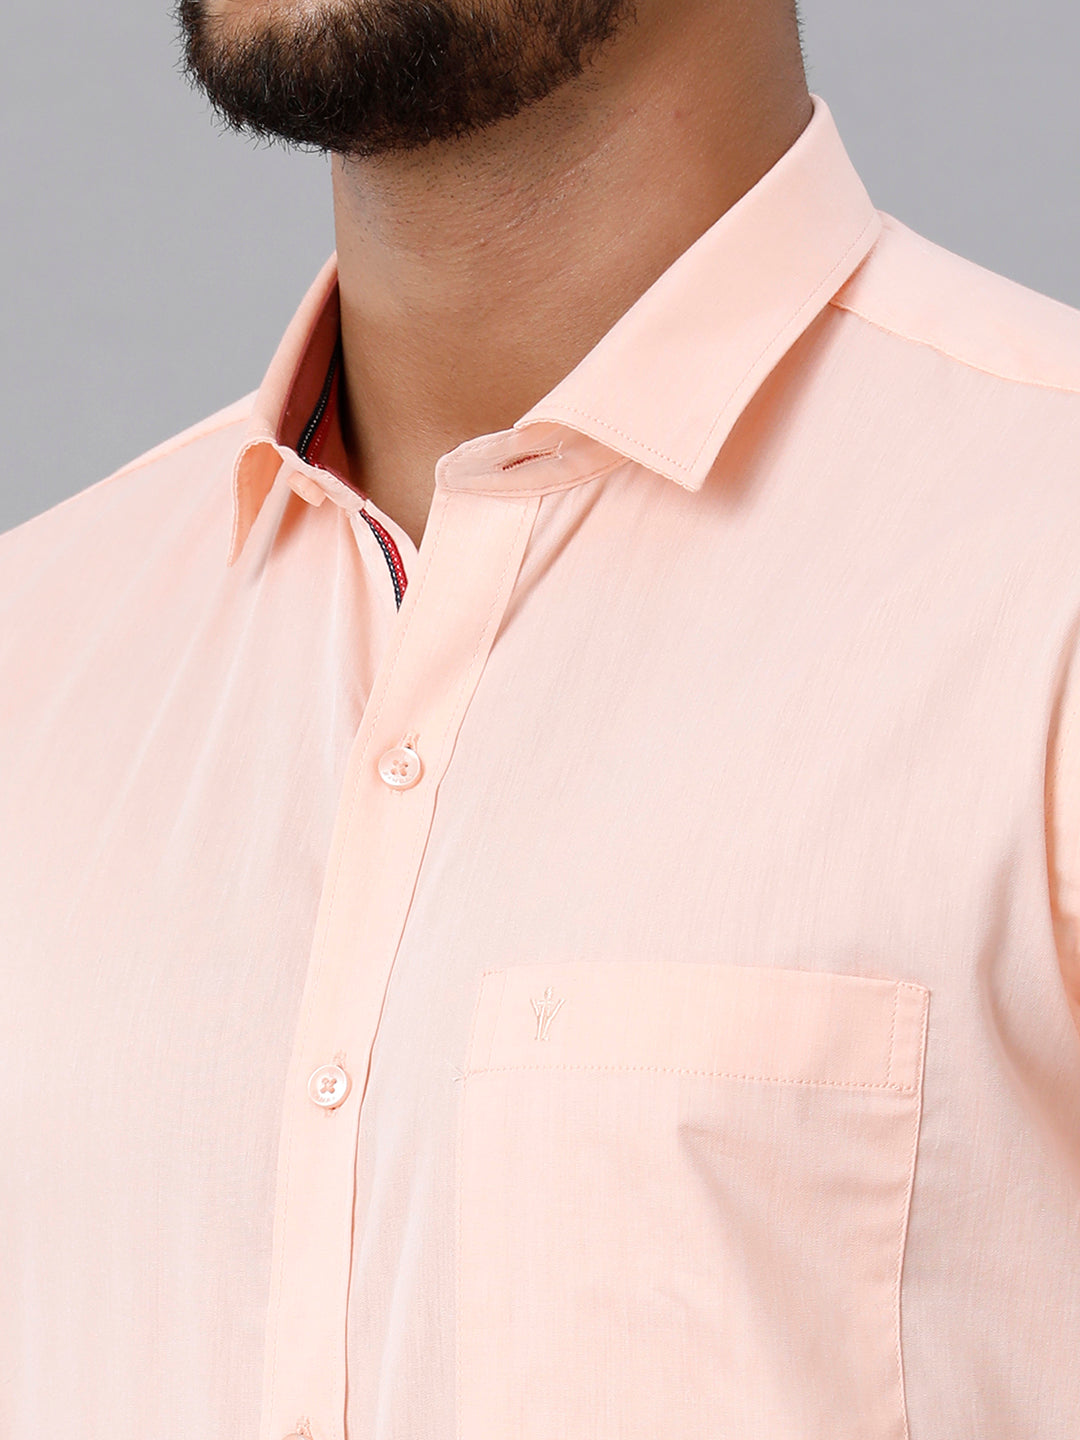 Mens Premium Cotton Formal Shirt Half Sleeves Light Orange MH G117-Zoom view